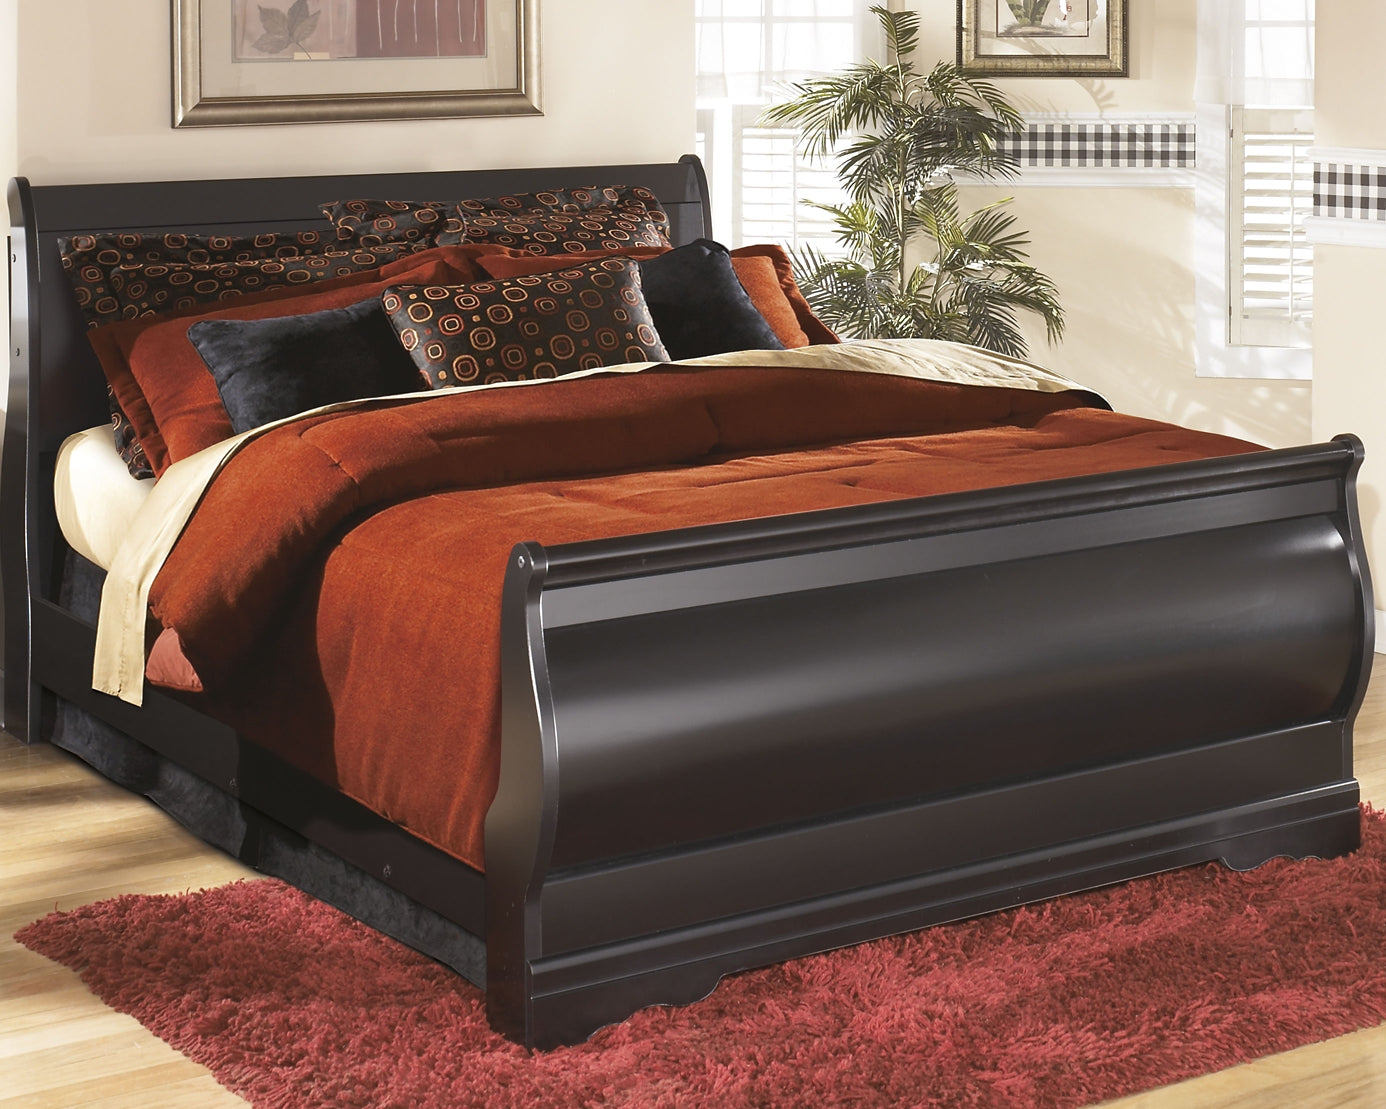 Huey Vineyard  Sleigh Bed With Dresser